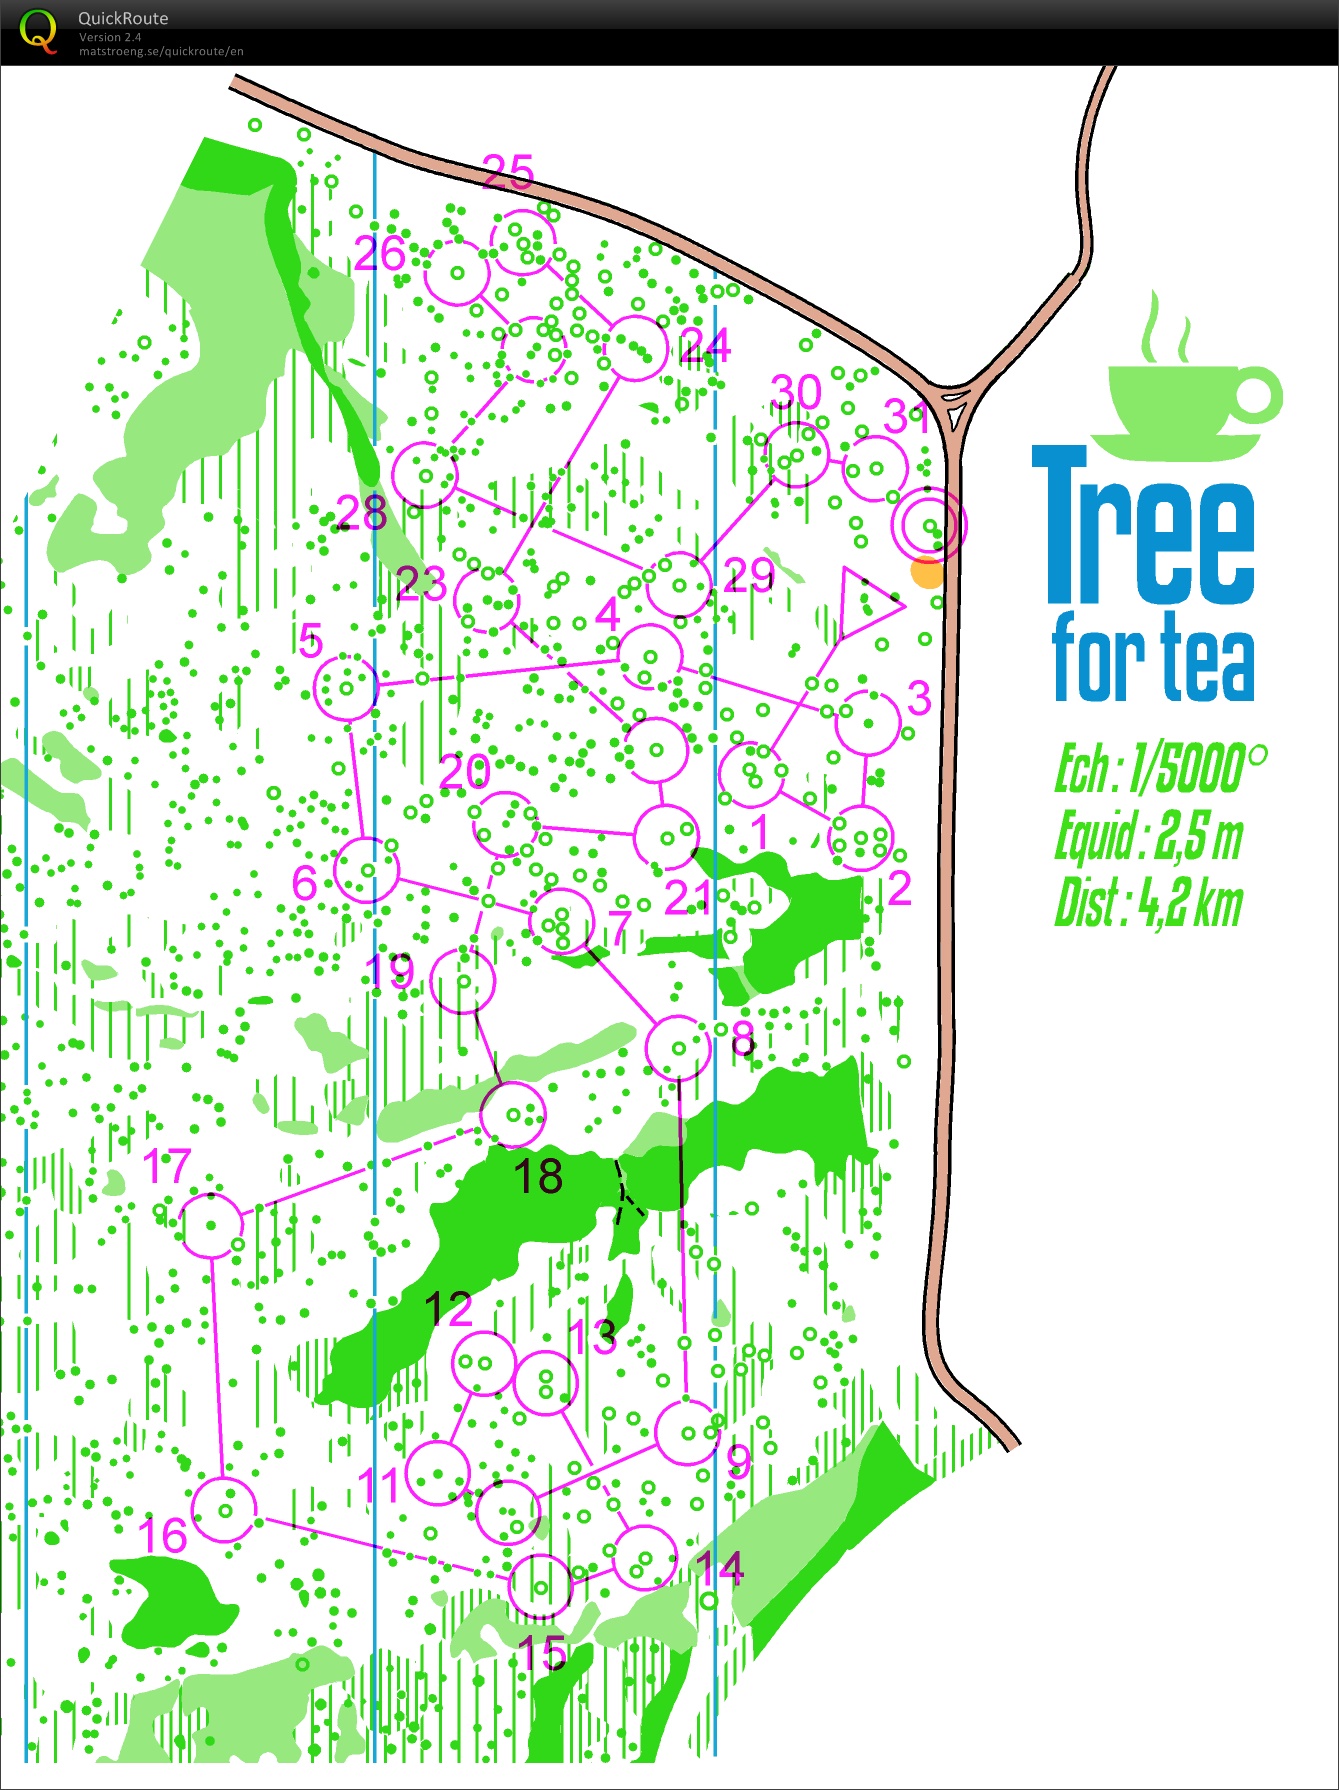 Tree for tea (16.01.2016)